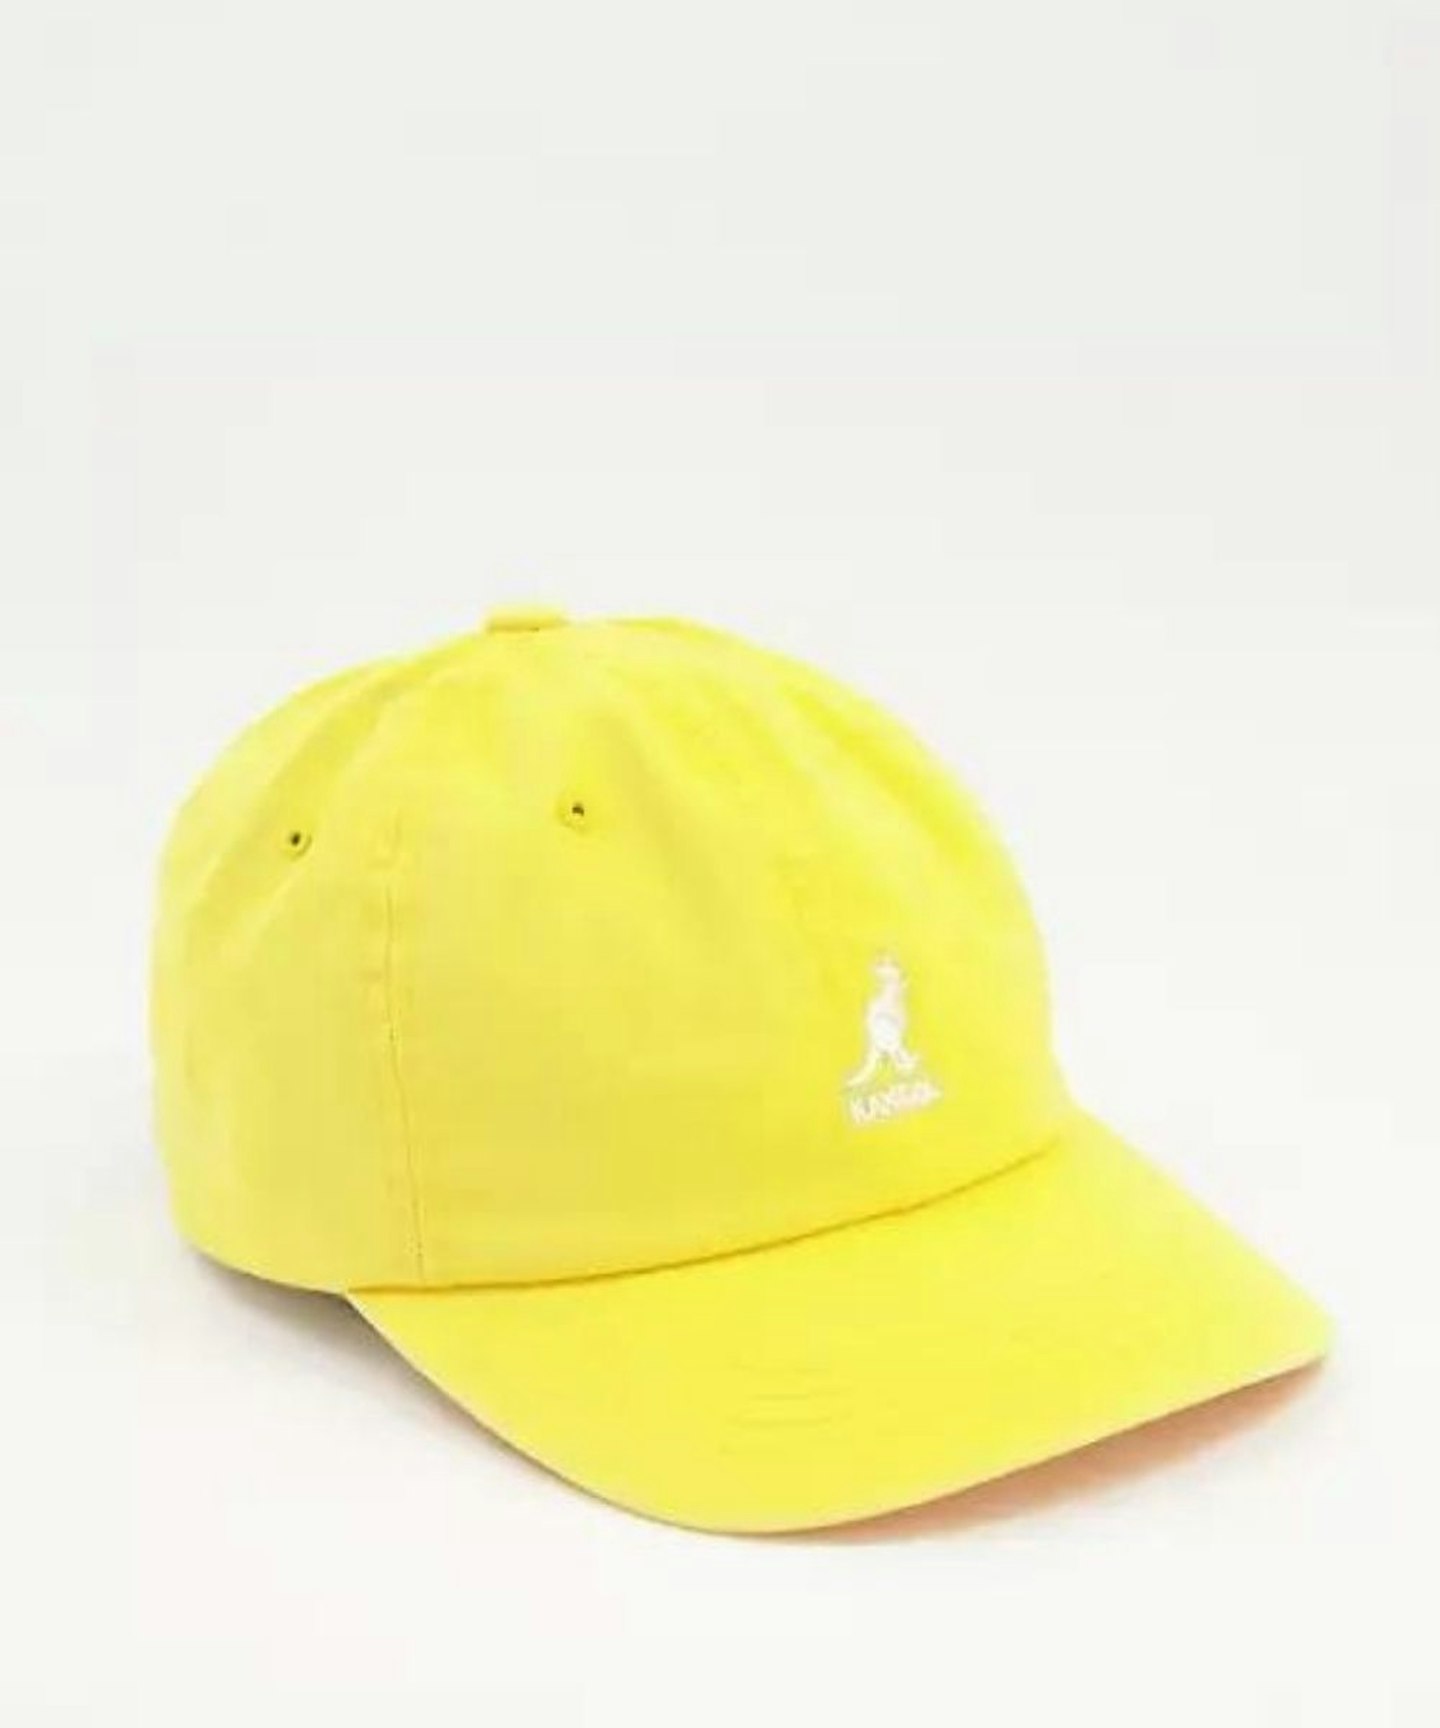 Kangol washed baseball cap in yellow